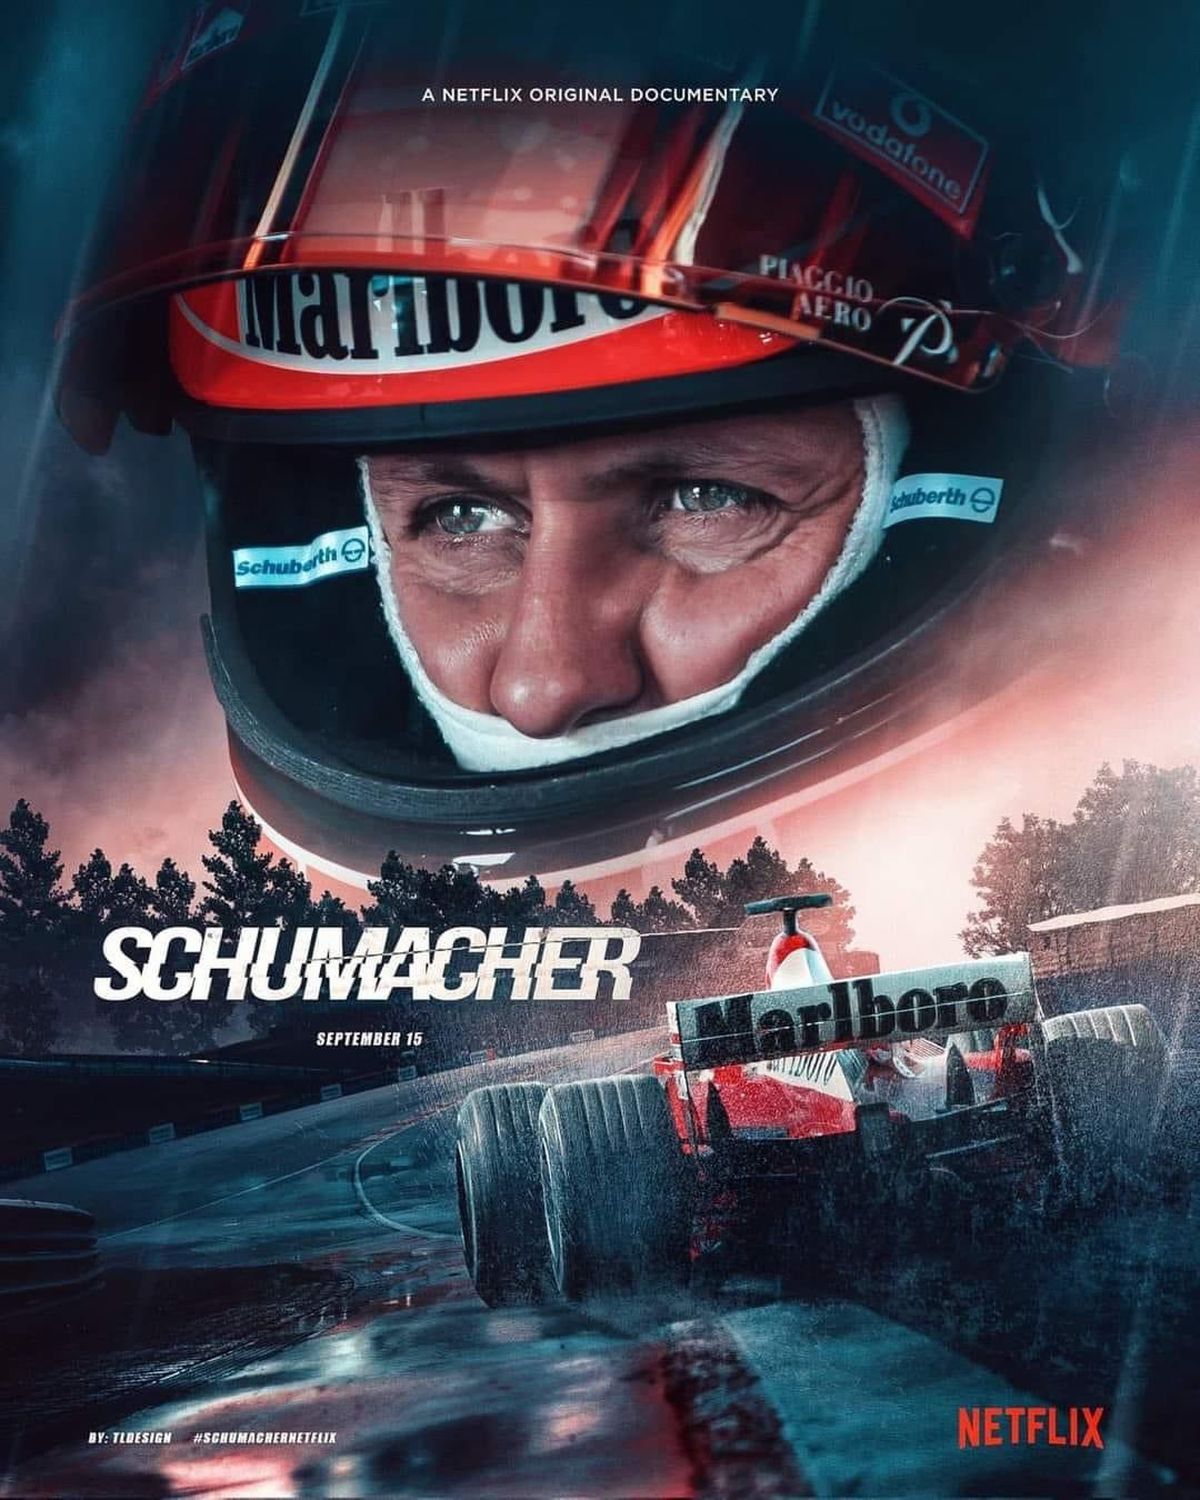 Netflix estrenará el documental de Michael Schumacher el 15 de septiembre.